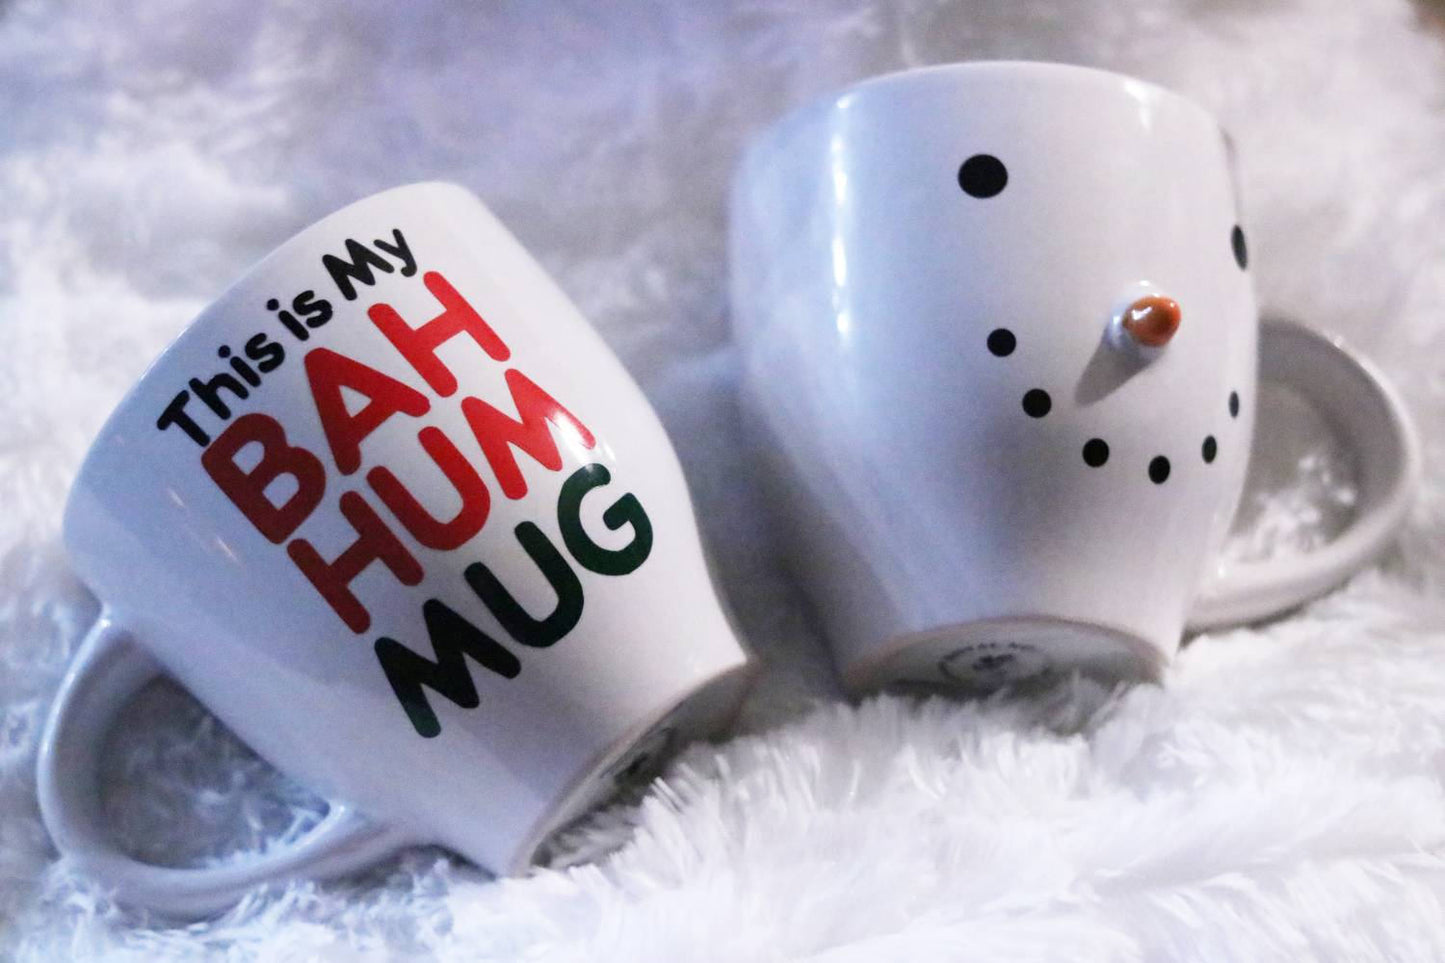 Bah hum mug coffee mug snowman / snowman coffee mug / funny mug / funny coffee mug - CCCreationz